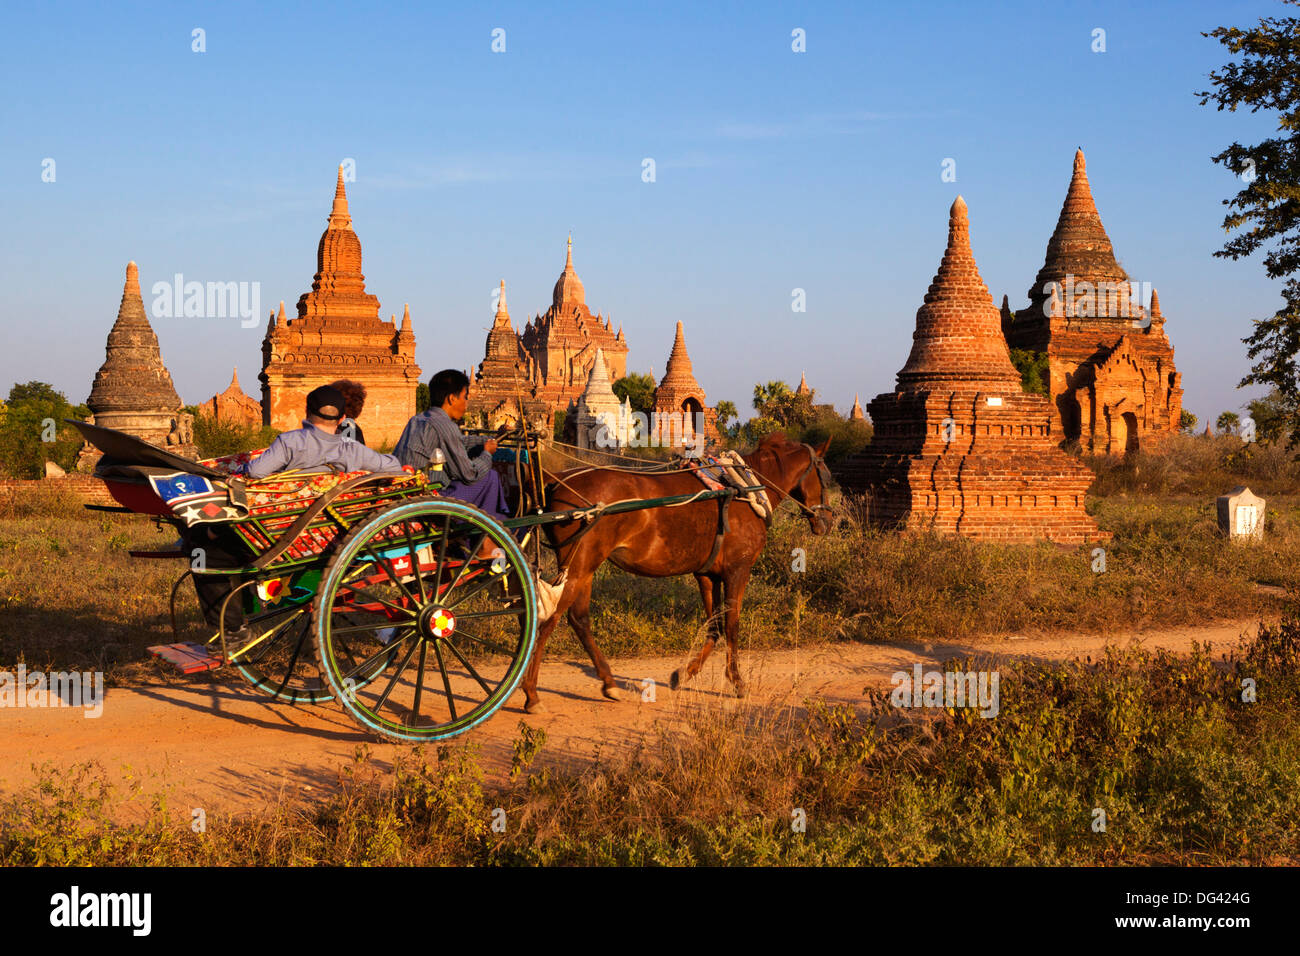 Wooden horse cart taking tourists around Bagan temples, Bagan (Pagan), Central Myanmar, Myanmar (Burma), Asia Stock Photo